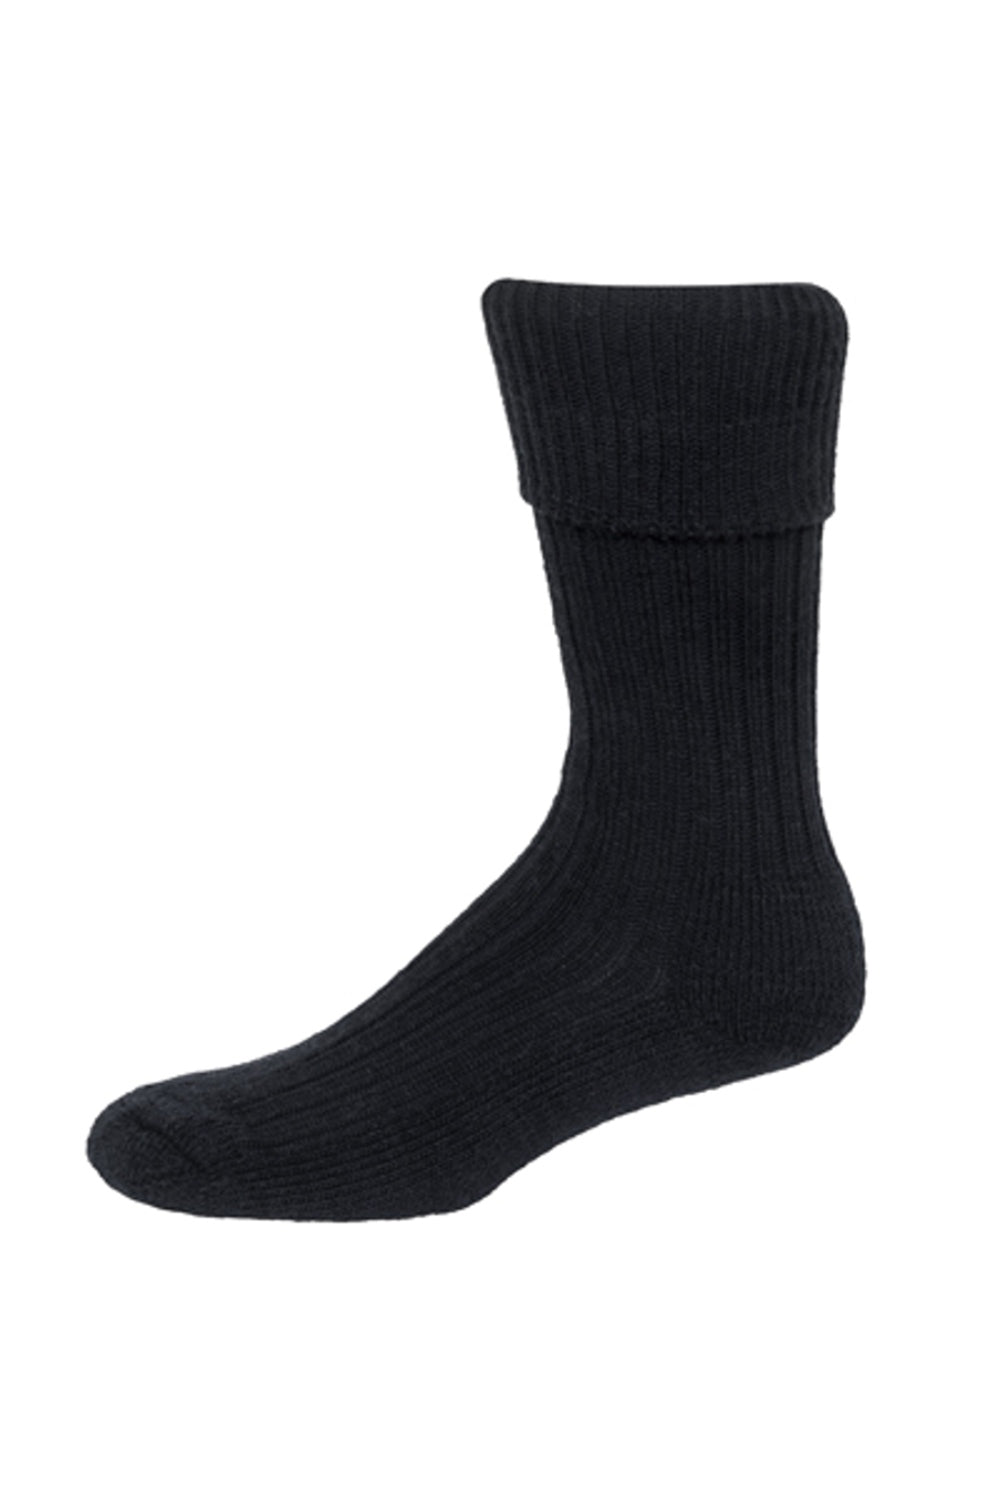 Hoggs of Fife Adventure Military Socks In Black